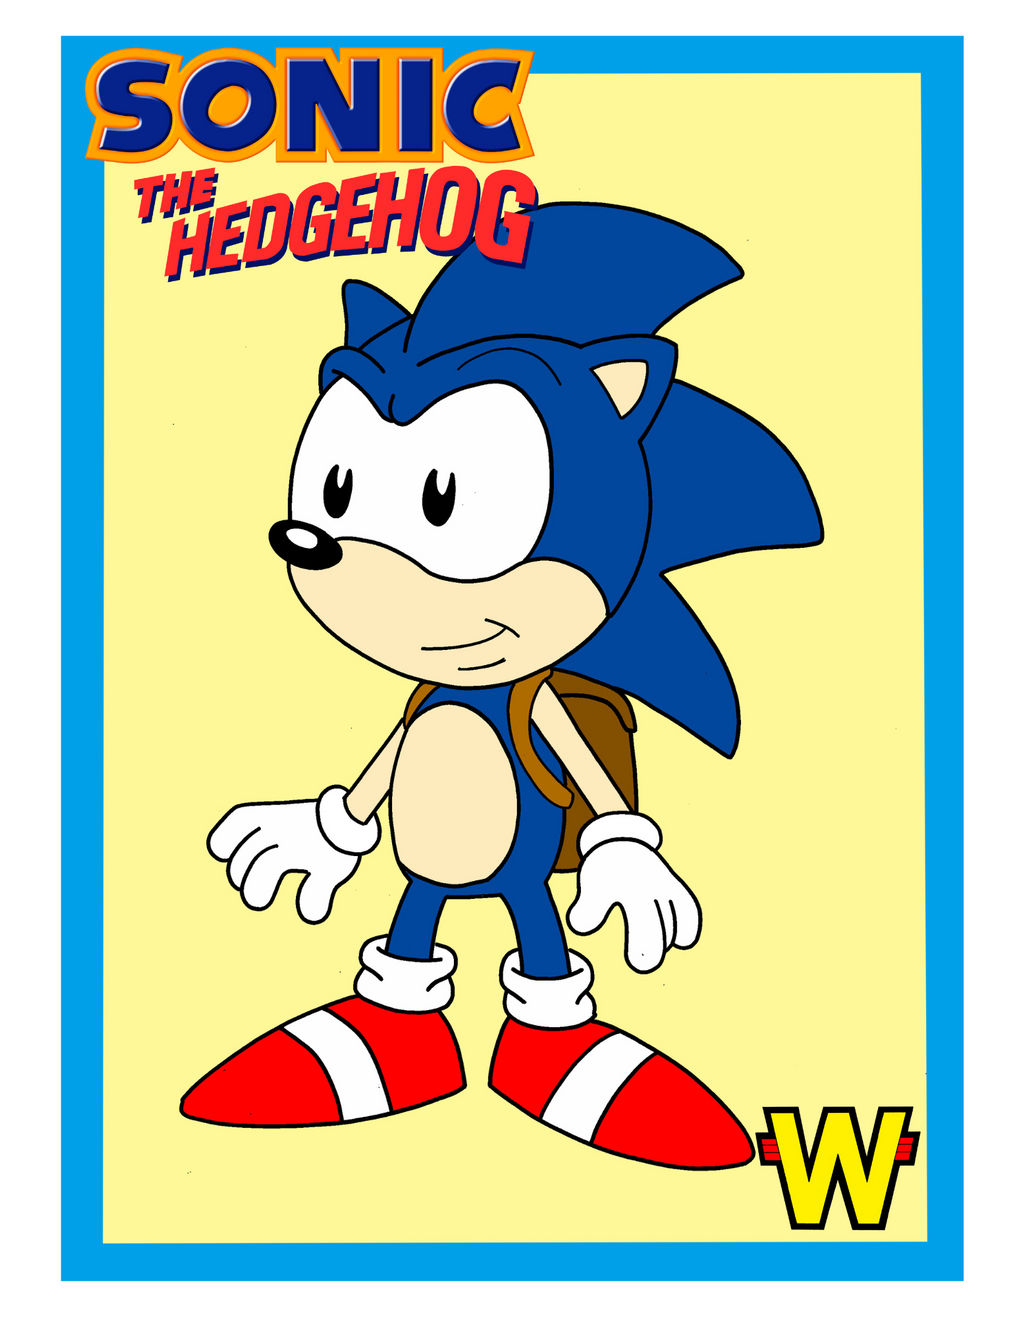 Sonic The Hedgehog 3 1993 Box art by ClassicSonicSatAm on DeviantArt